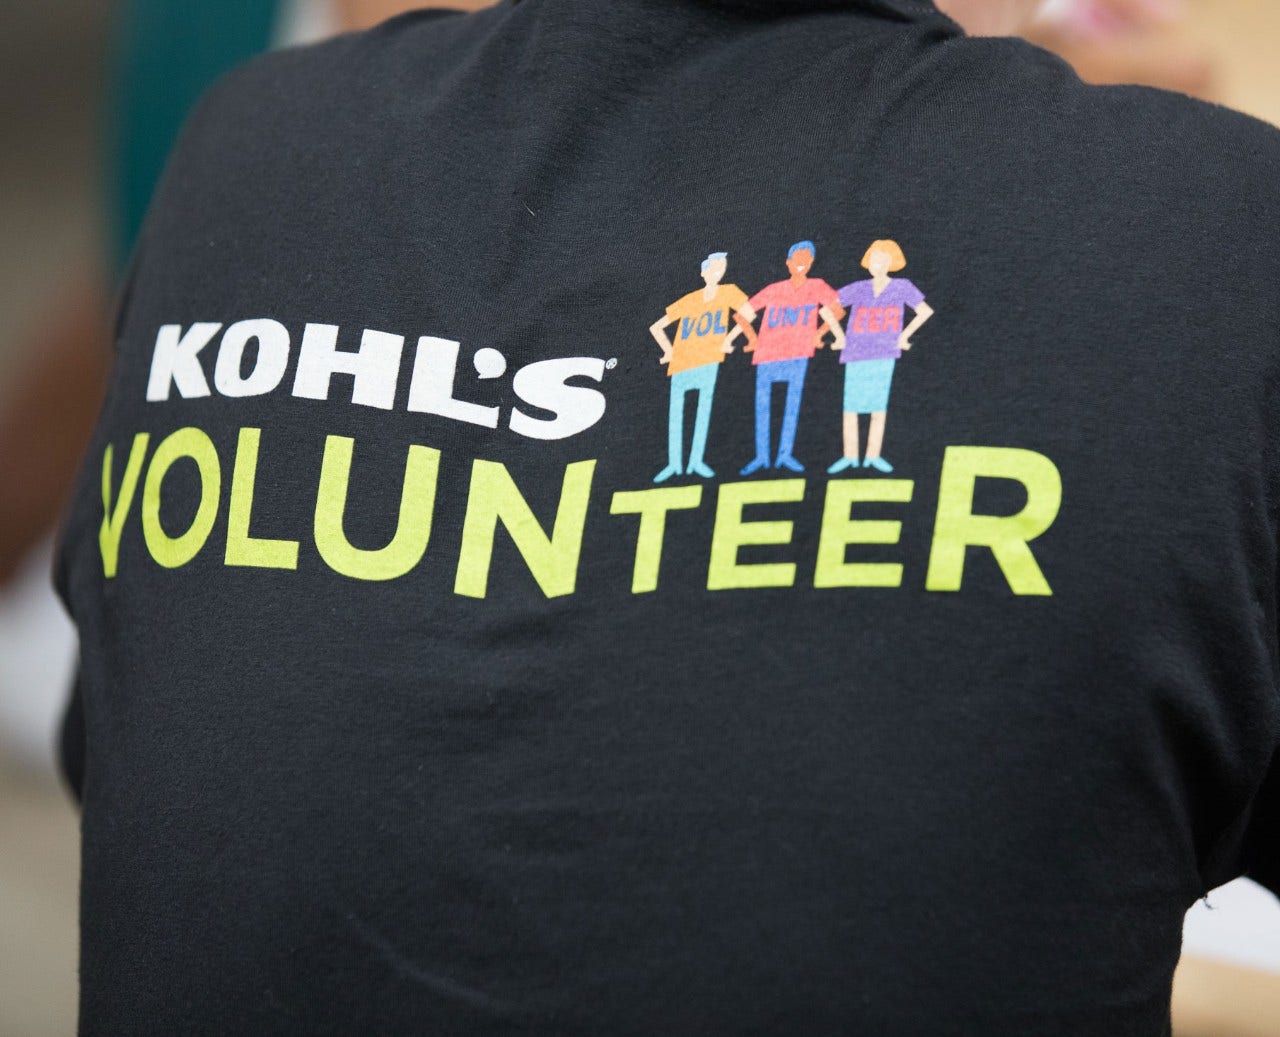 Kohls Volunteer Tshirt